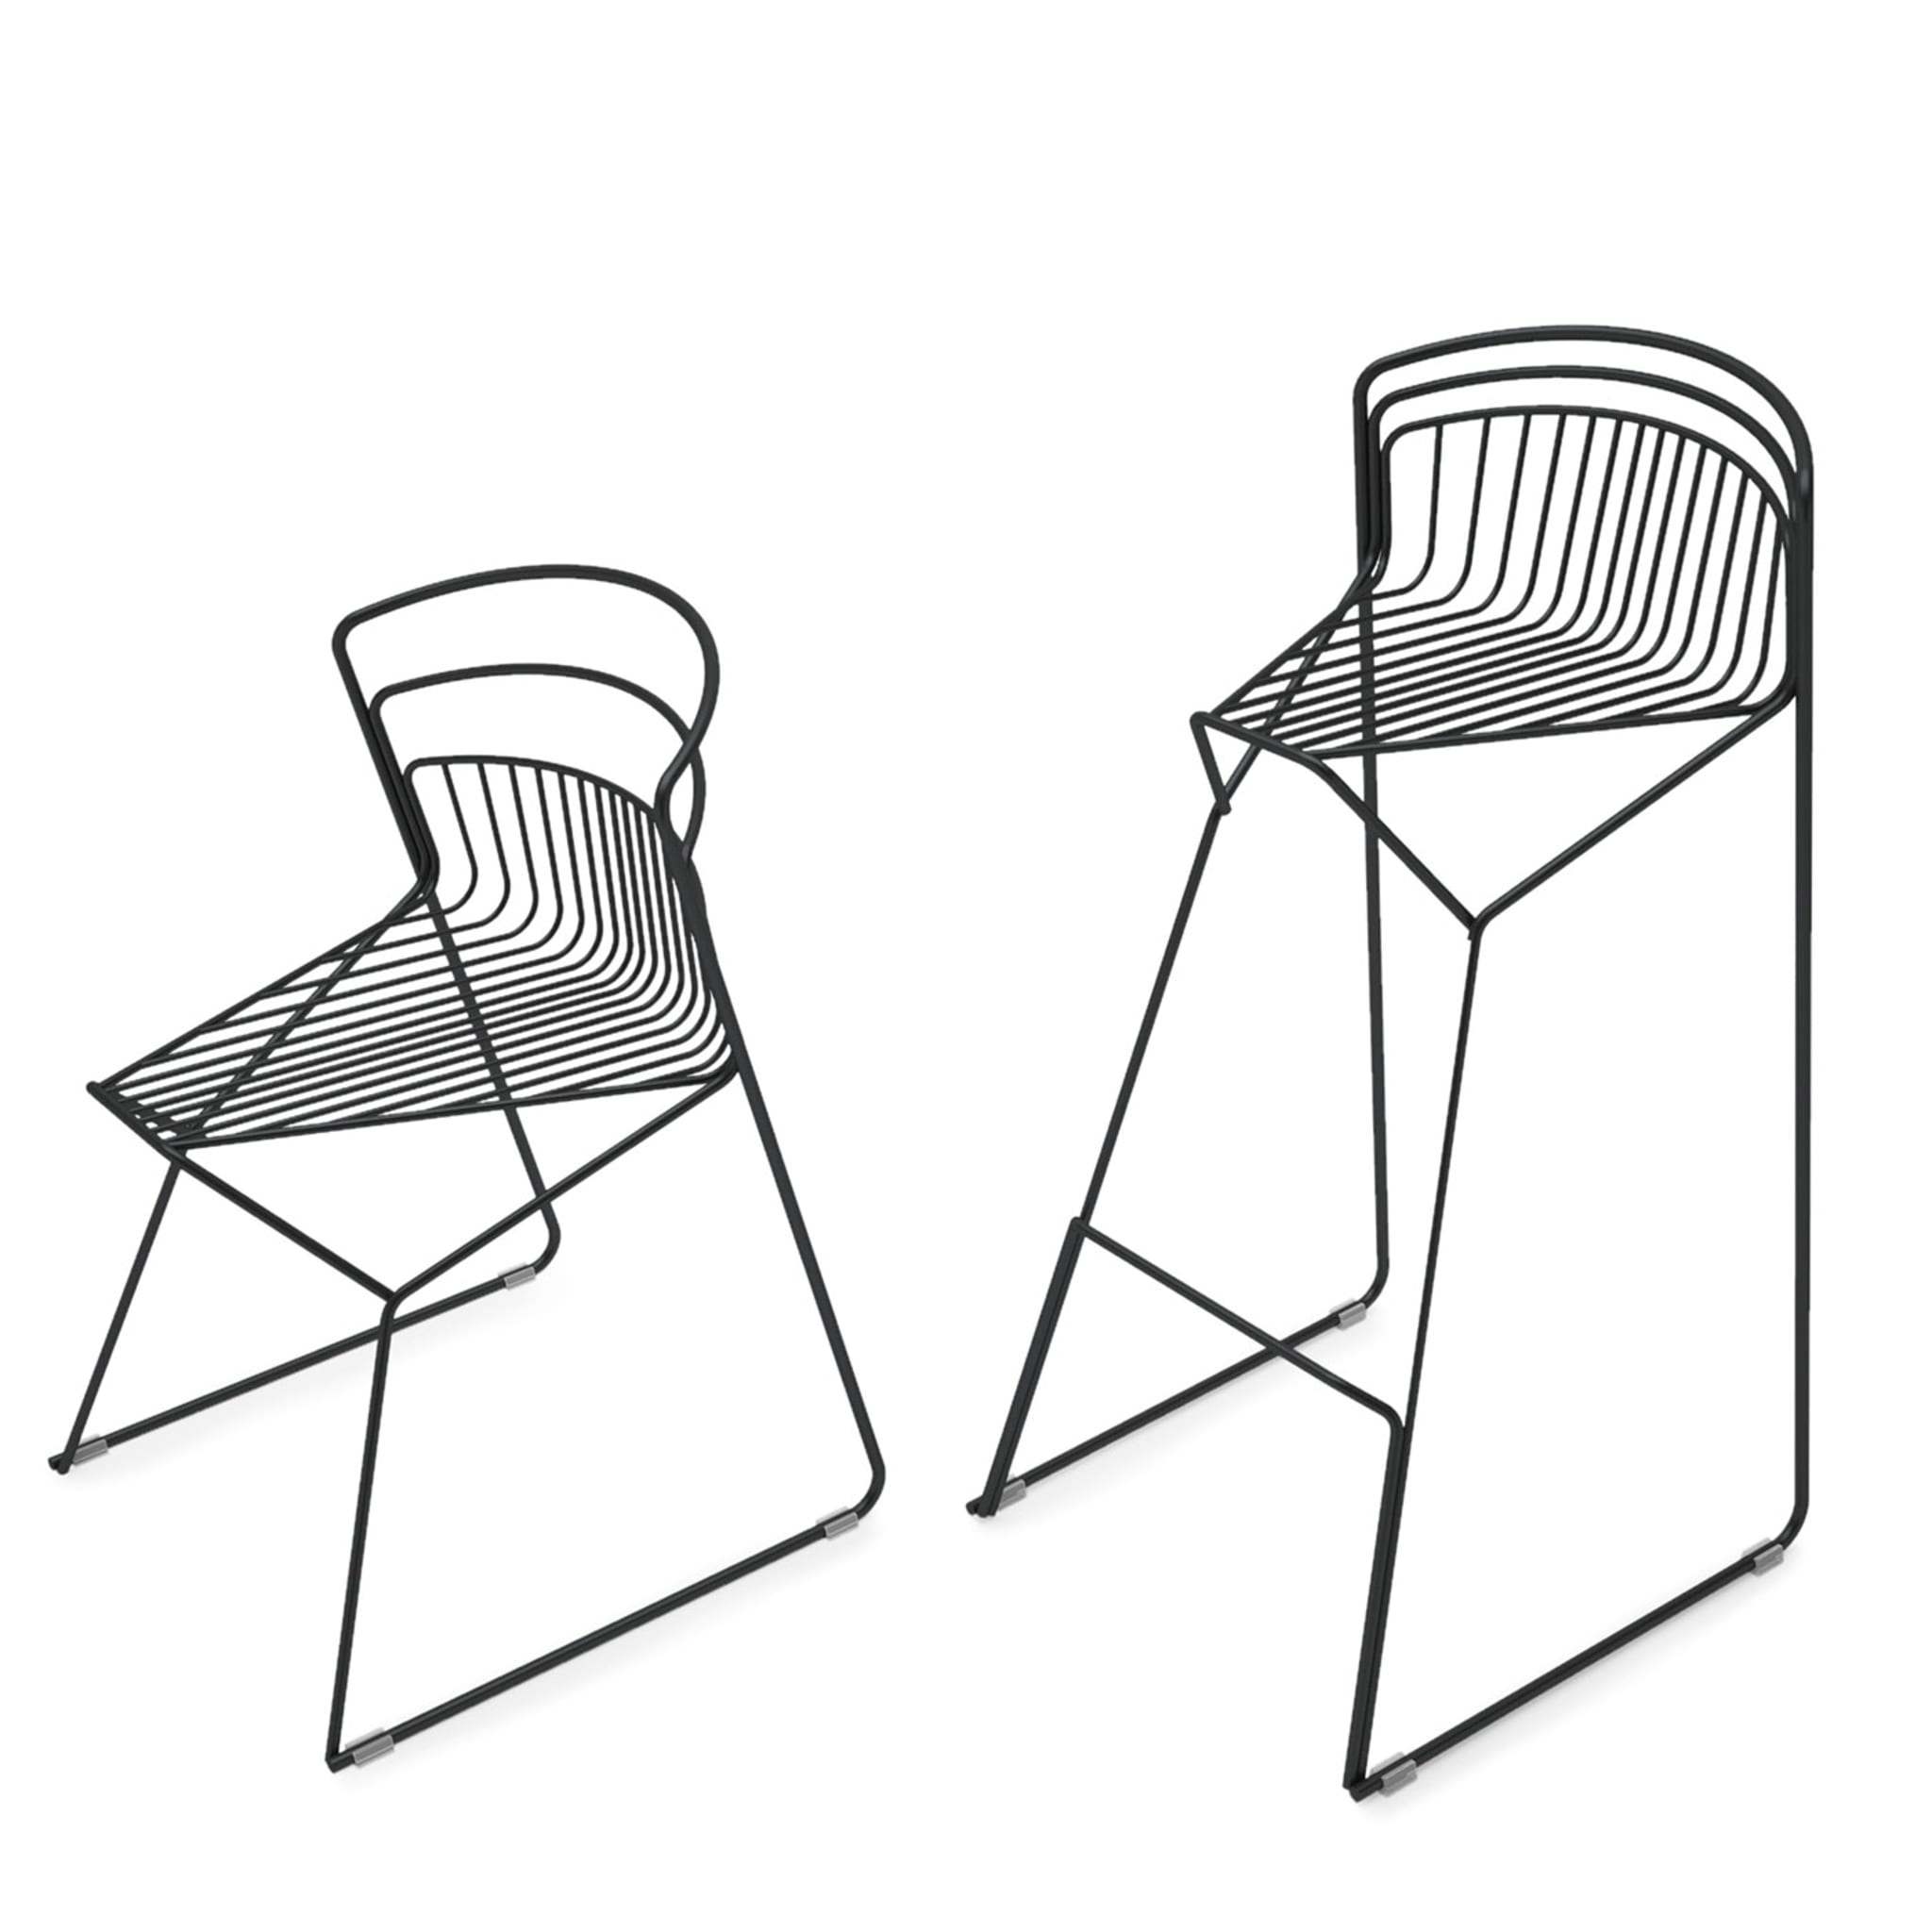 Ribelle Black Chair - Alternative view 2